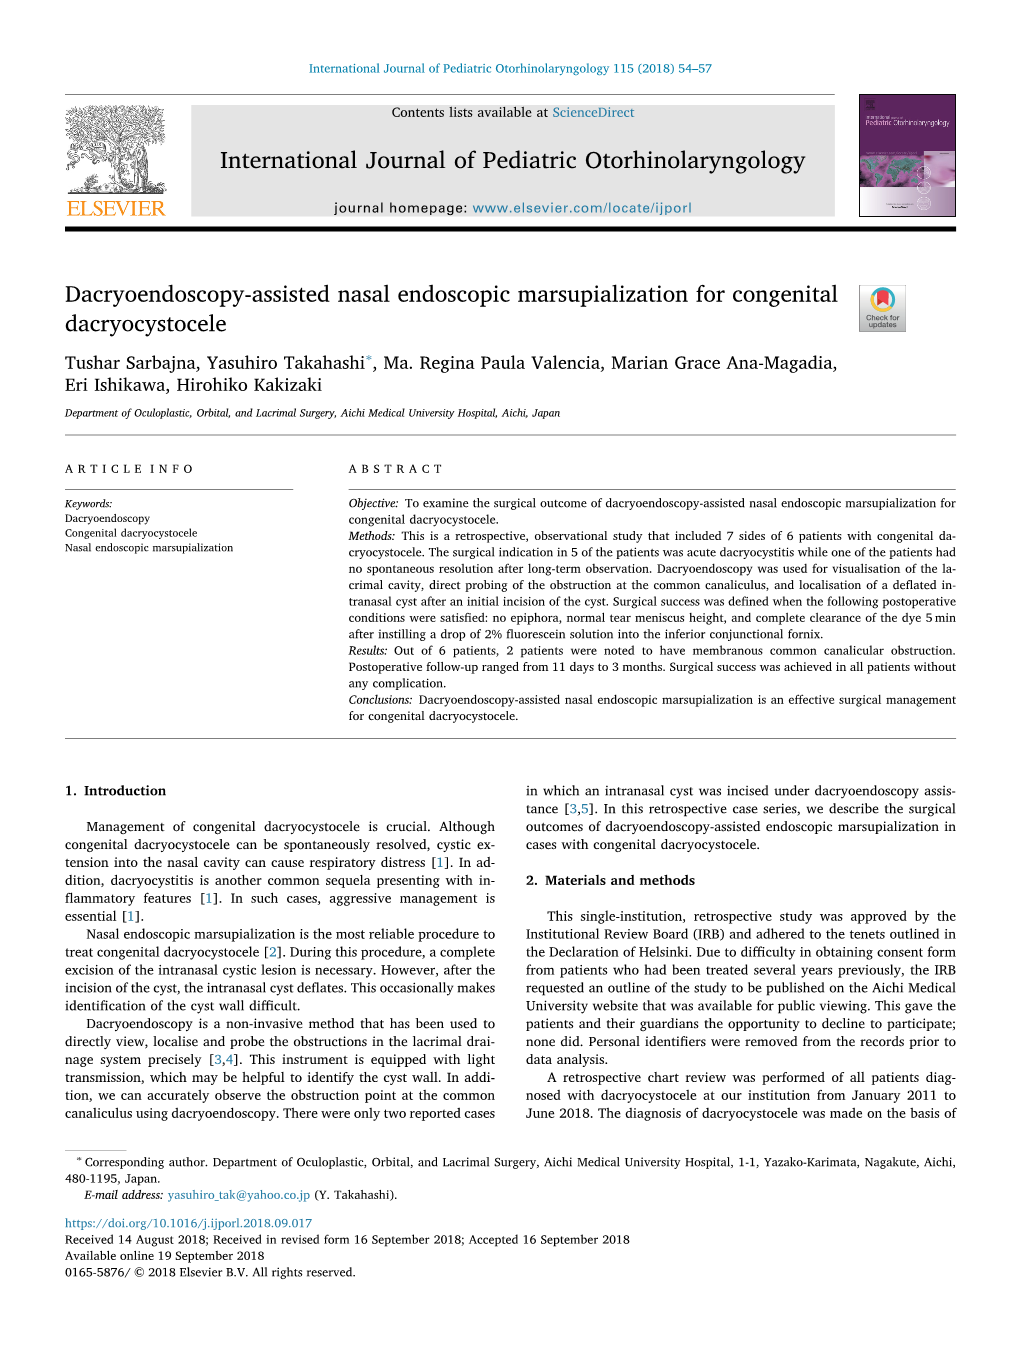 Dacryoendoscopy-Assisted Nasal Endoscopic Marsupialization for Congenital Dacryocystocele T